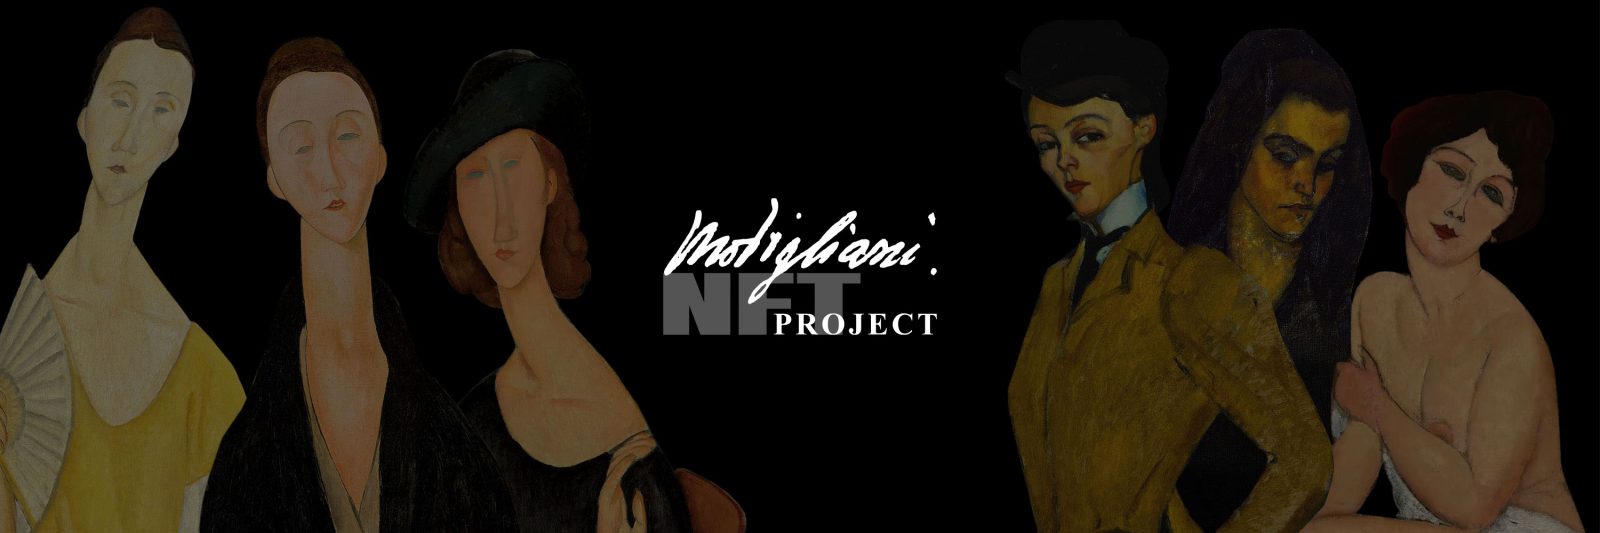 Modigliani NFT project